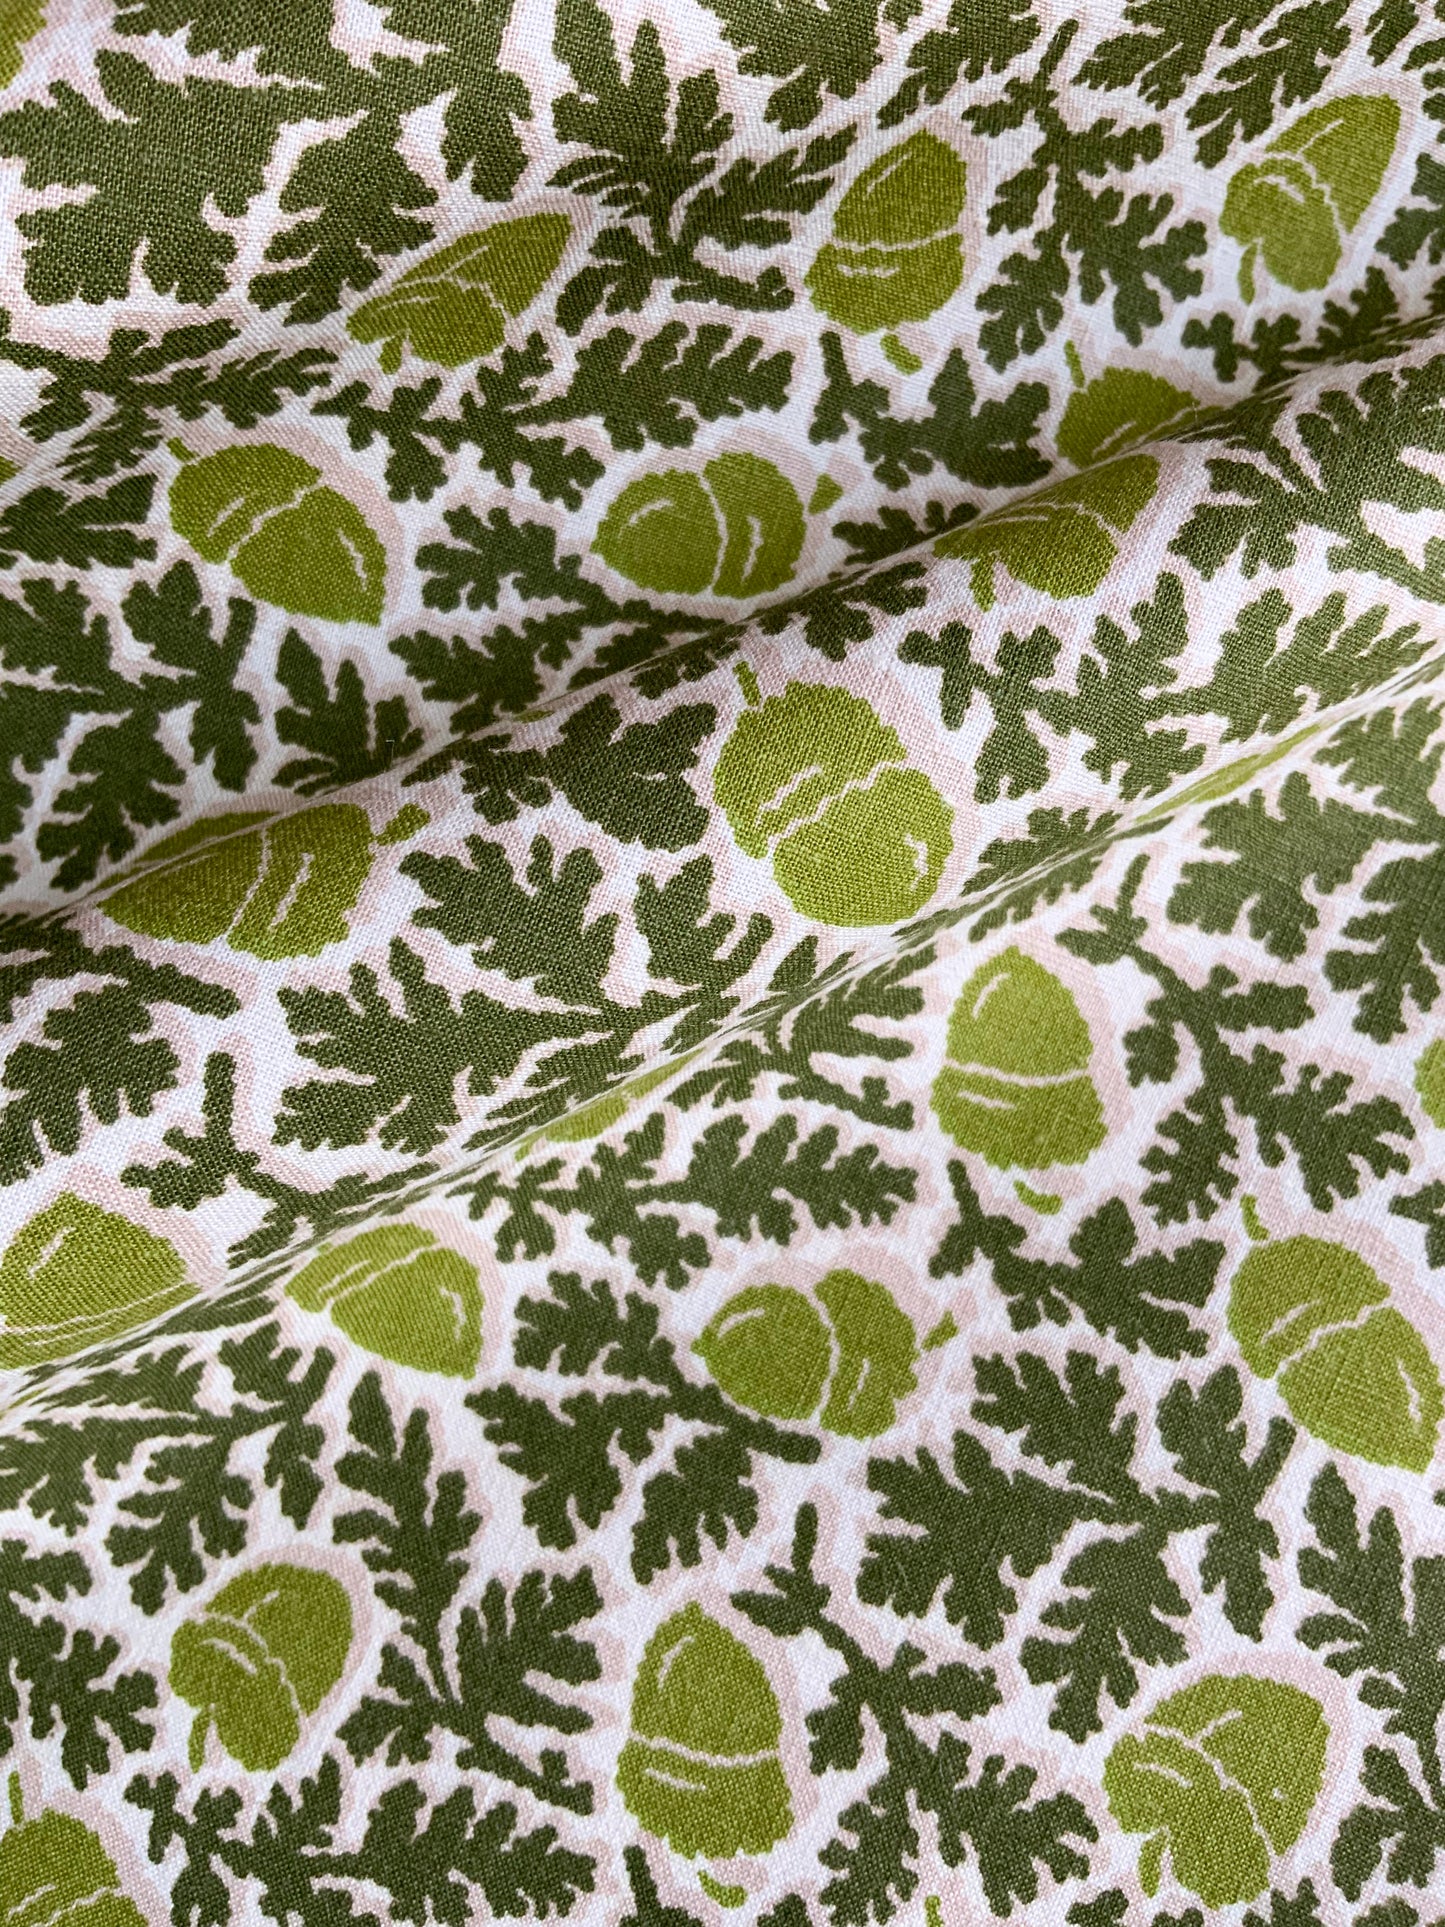 Tasha Tudor’s Original Dress Handprint in Green/Chartreuse